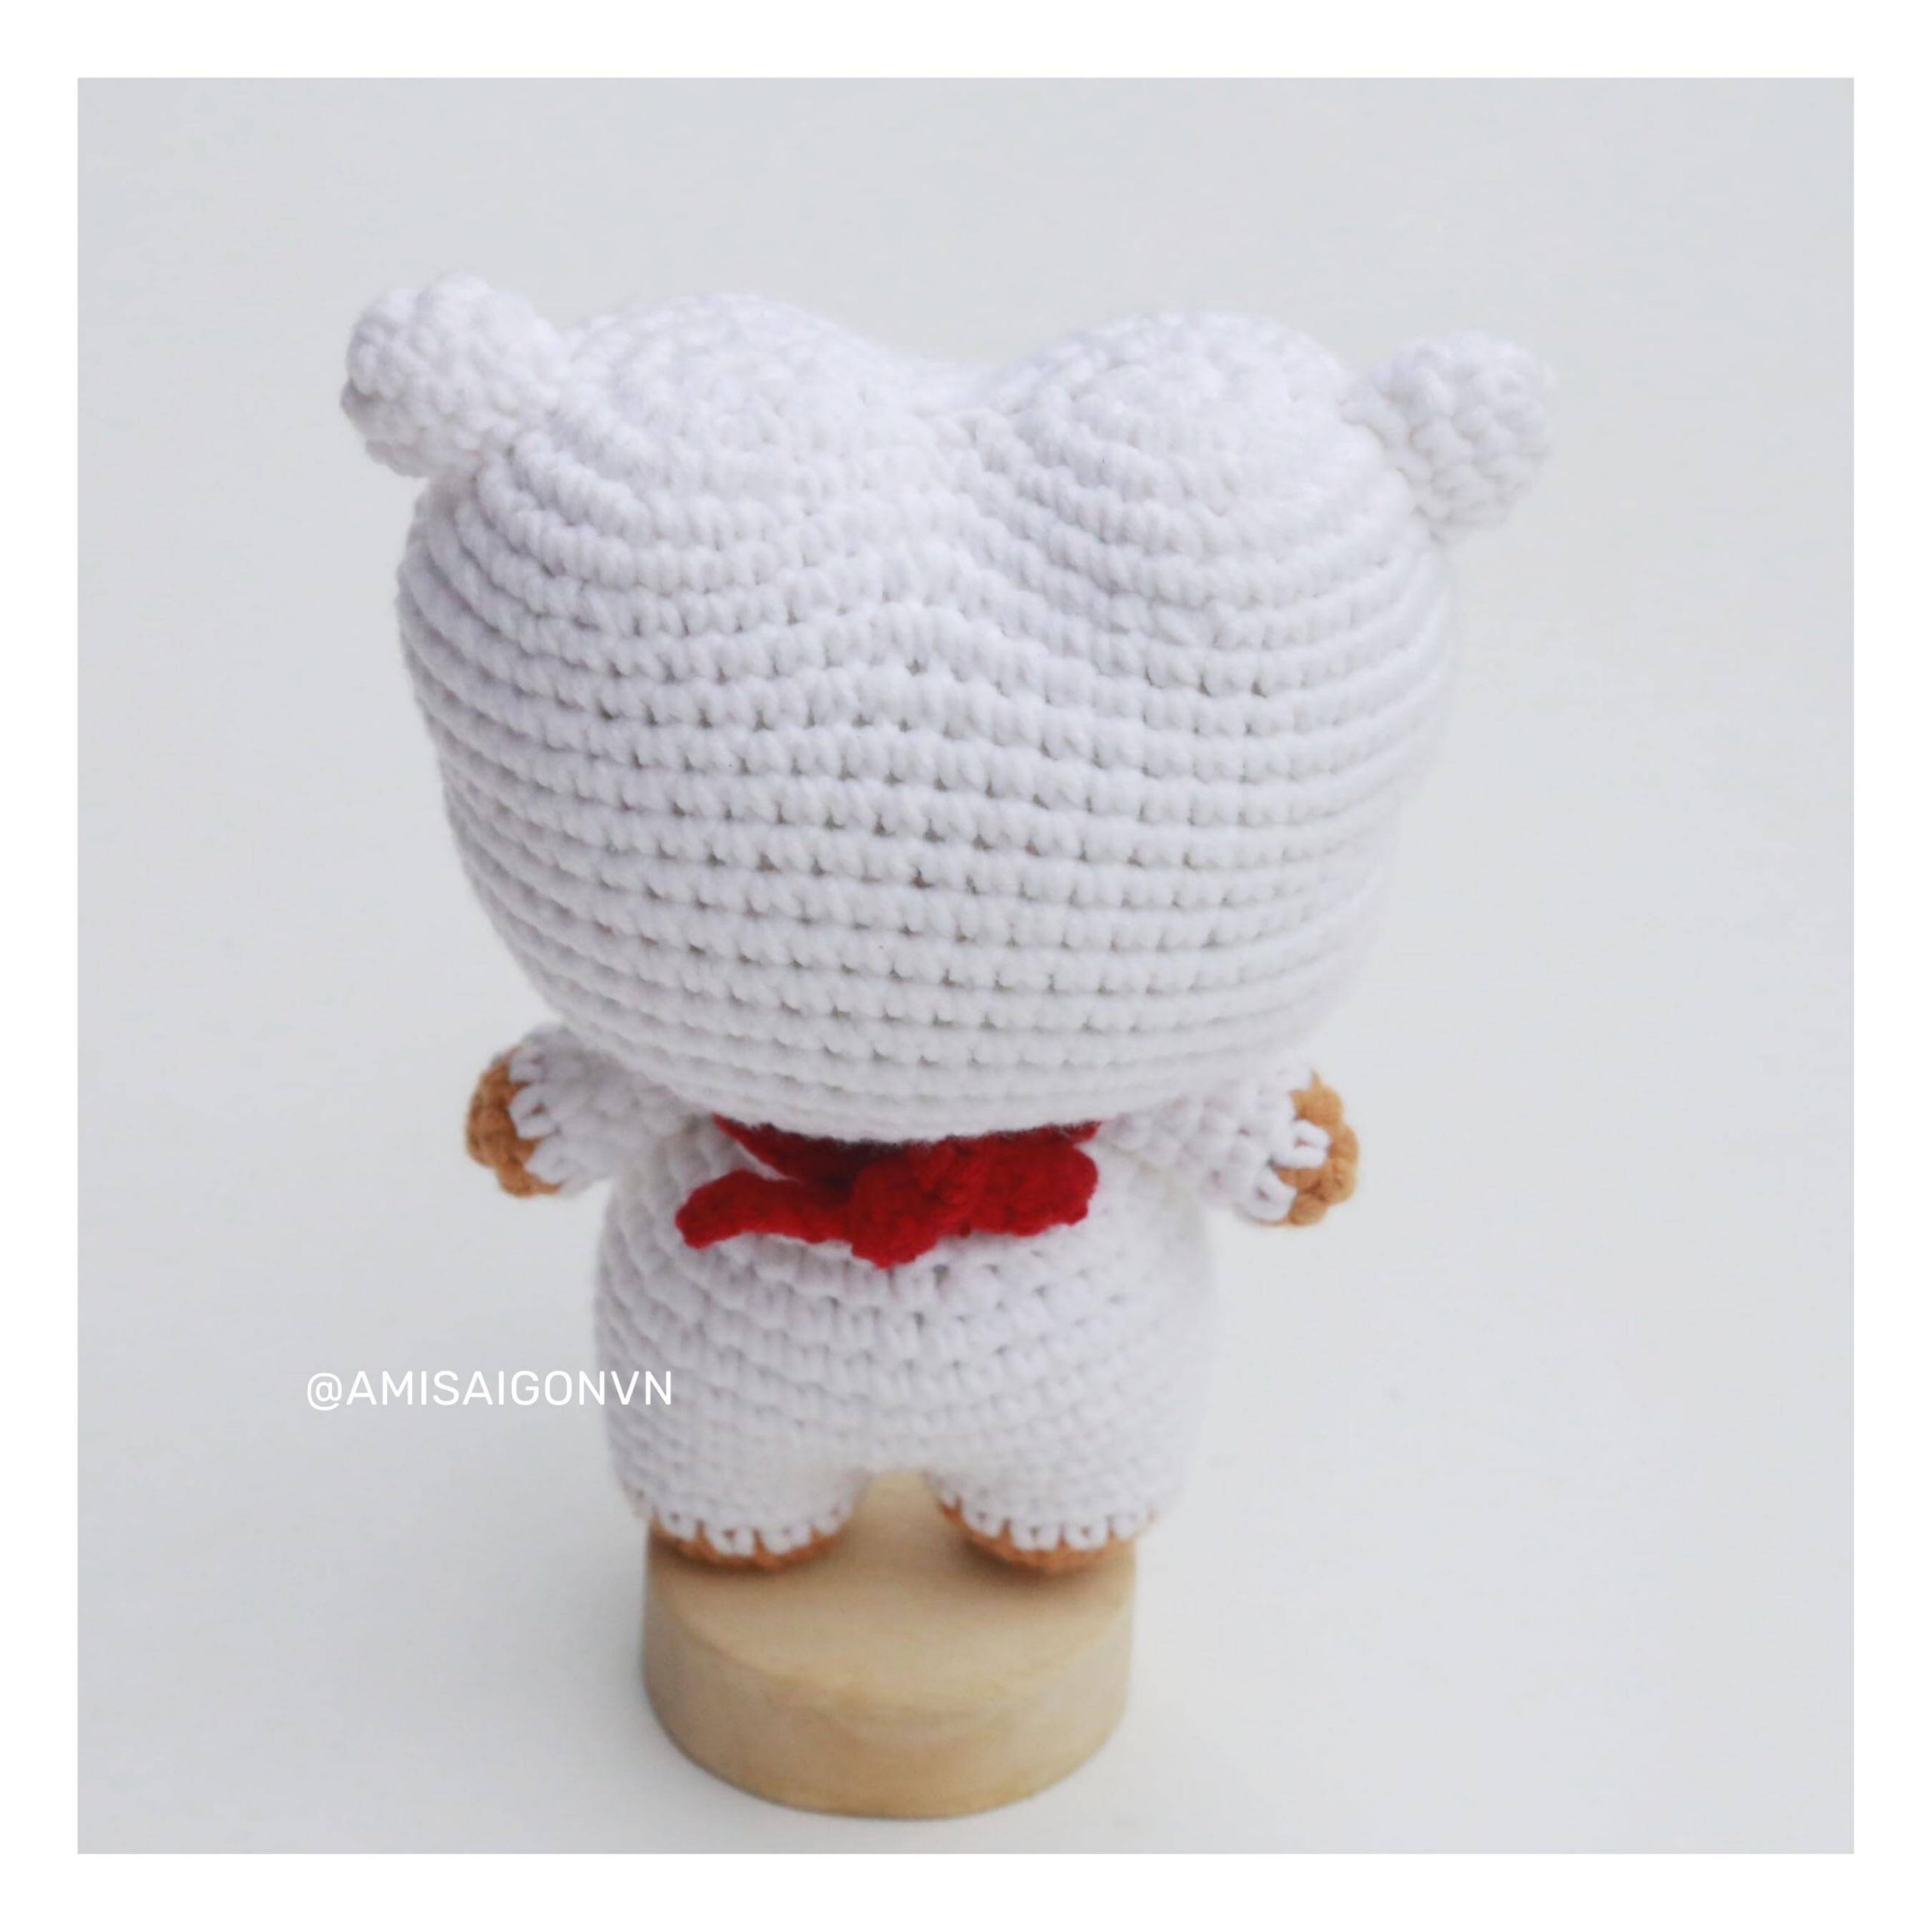 RJ-sheep-amigurumi-crochet-pattern-amisaigon-bts-bt21 (2)